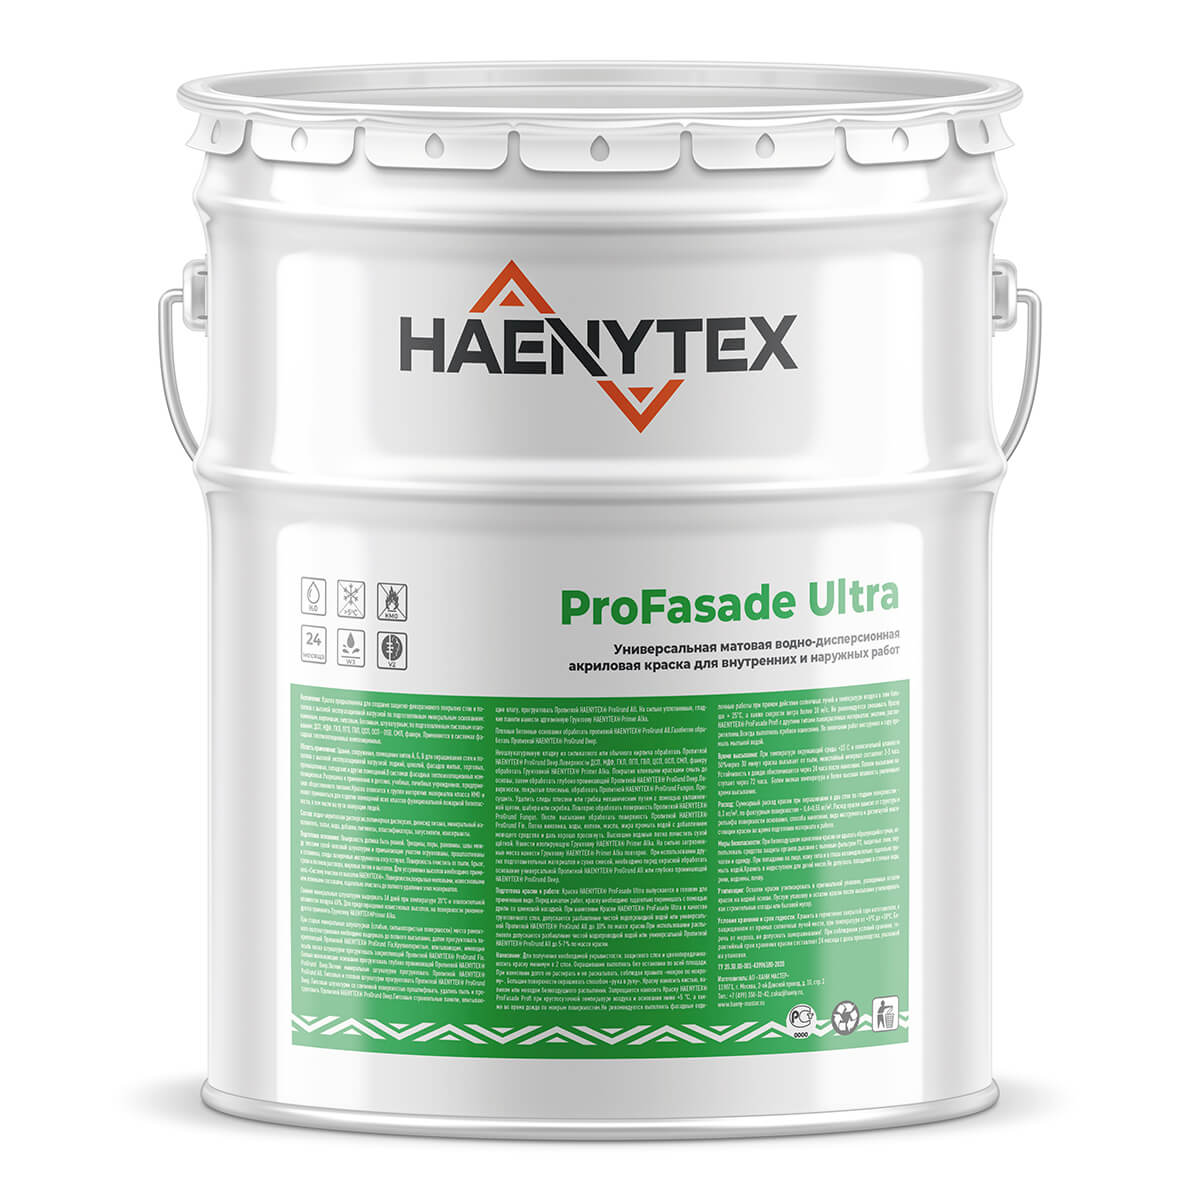 HAENYTEX® ProFasade Ultra